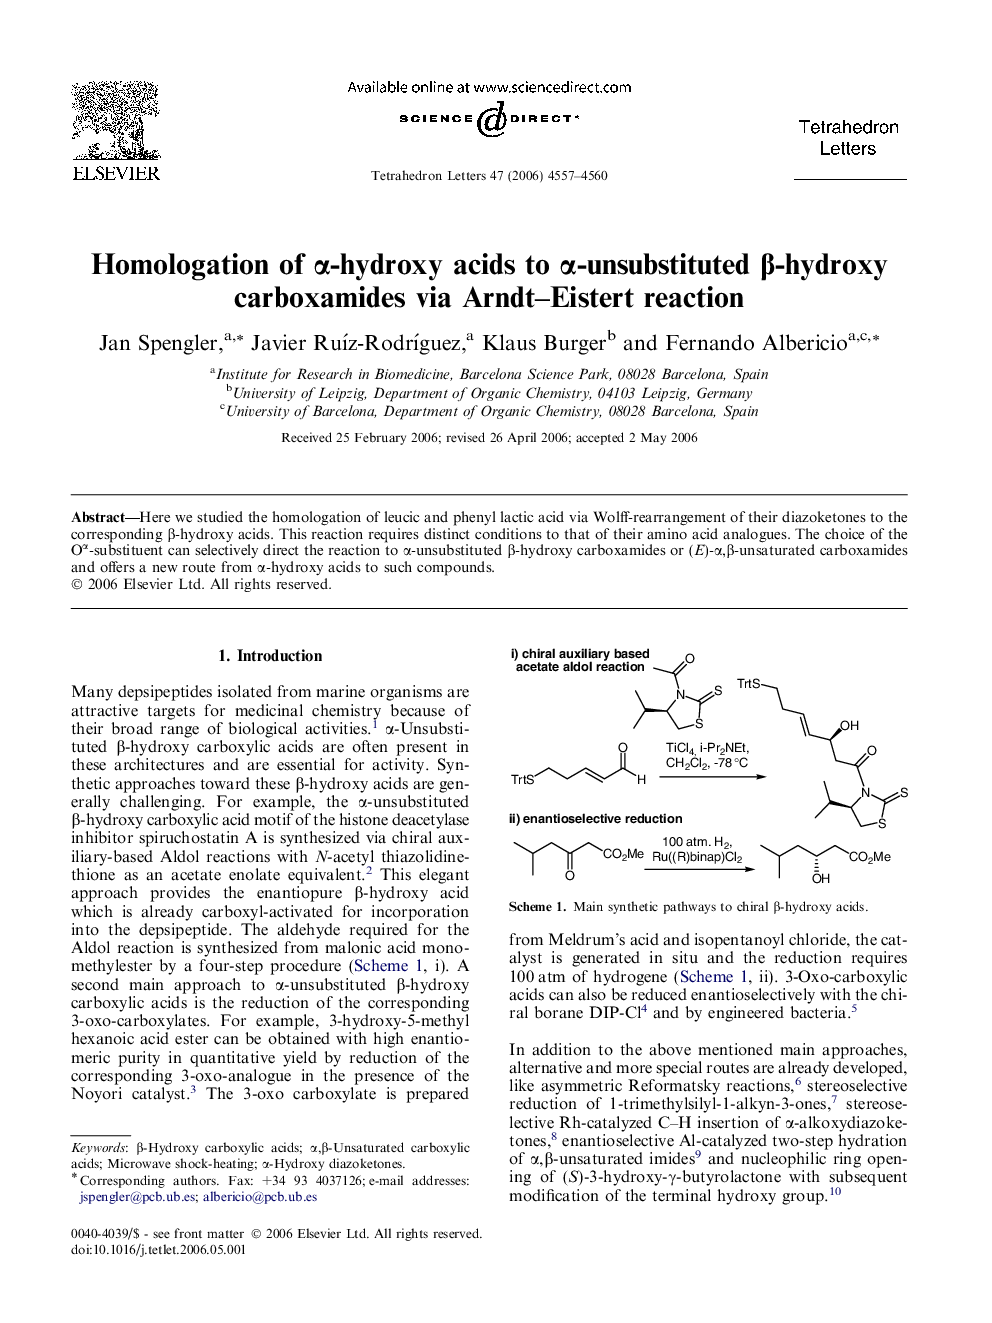 Homologation of Î±-hydroxy acids to Î±-unsubstituted Î²-hydroxy carboxamides via Arndt-Eistert reaction